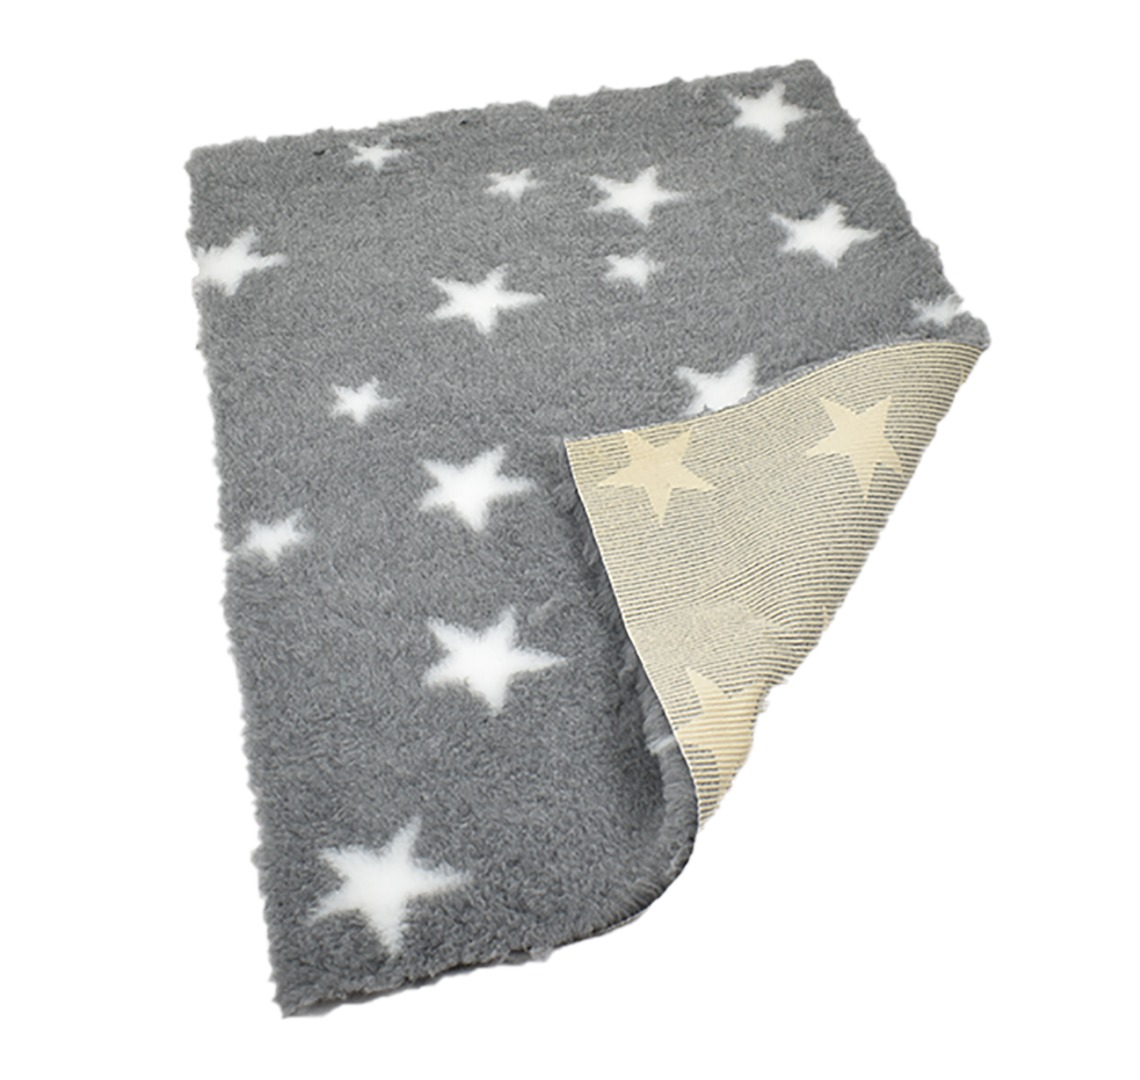 Big Star  High Grade Vet Bedding Non-Slip back Bed Fleece for Pets 1300gsm 3 colours 4 sizes